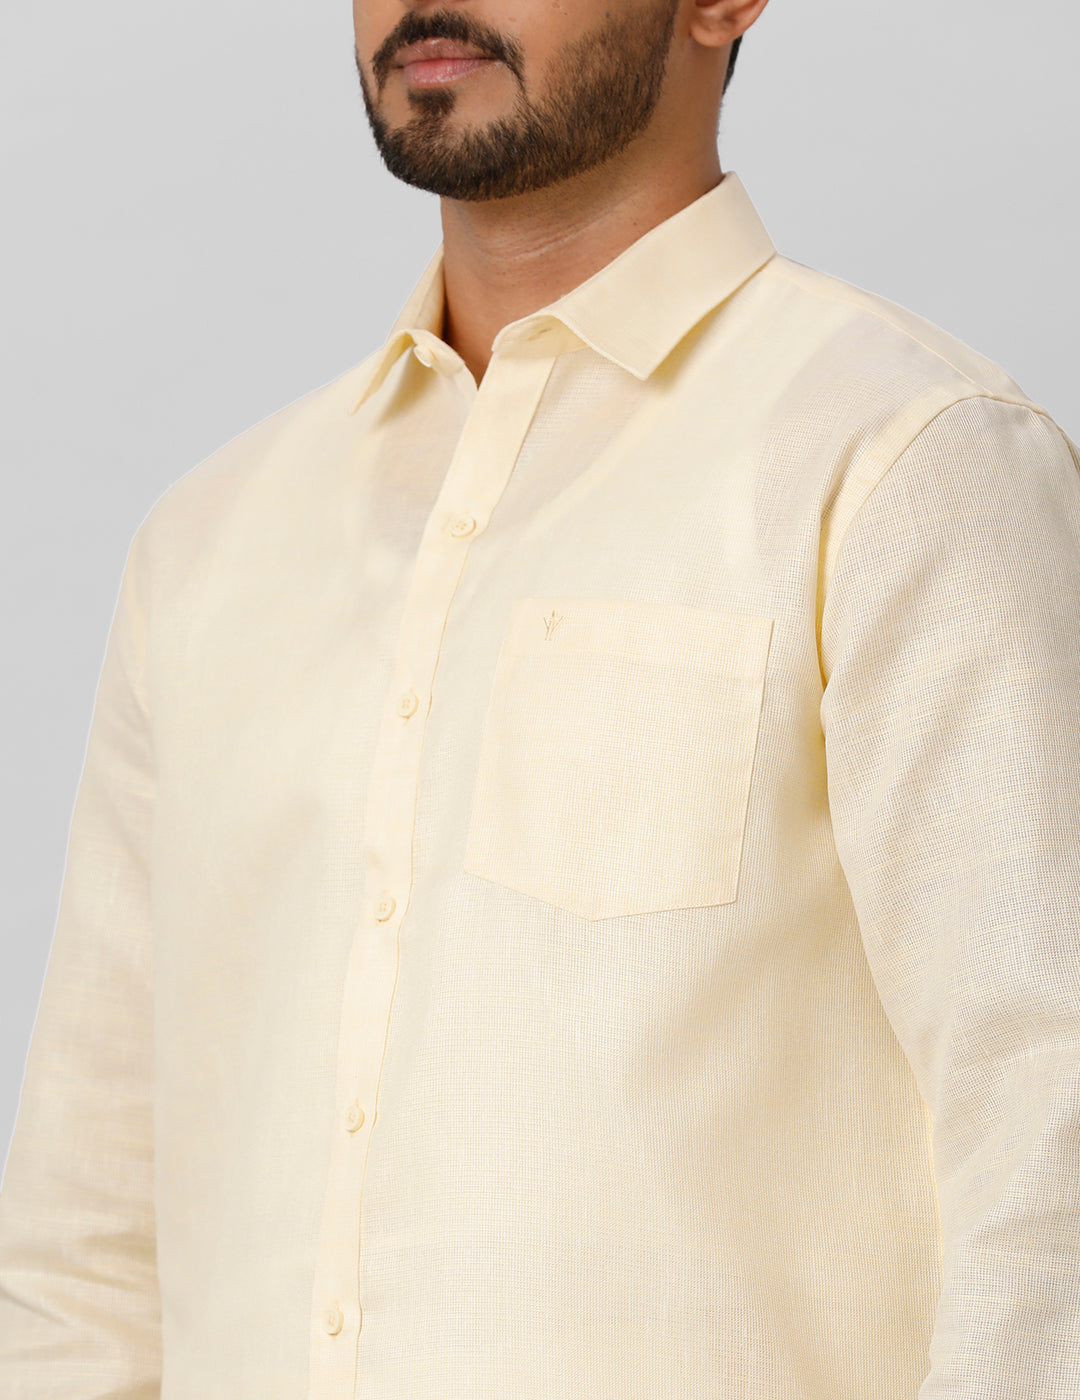 Mens Cotton Formal Shirt Full Sleeves Yellow T3 CV1-Zoom view